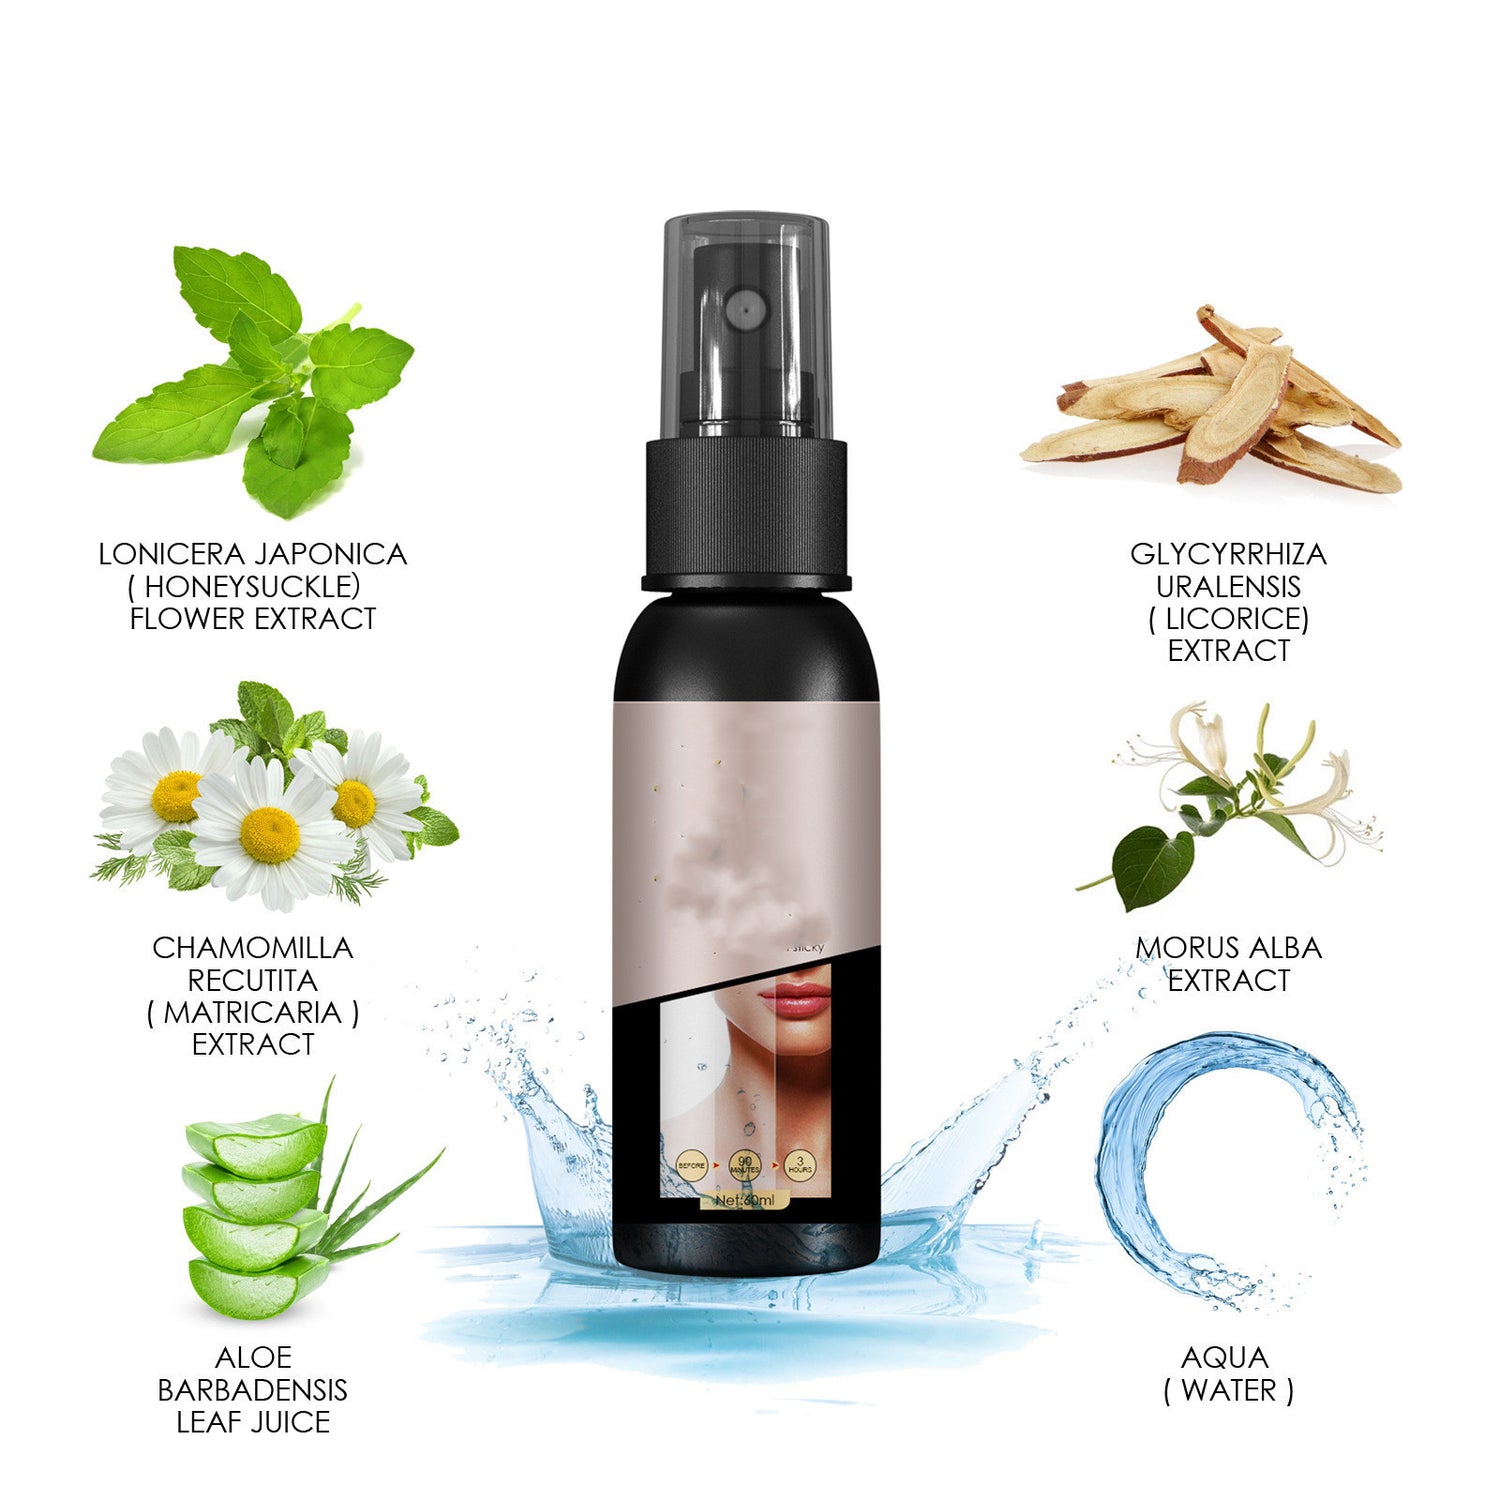 Bronzer Skin Toner Spray Moisture Replenishment